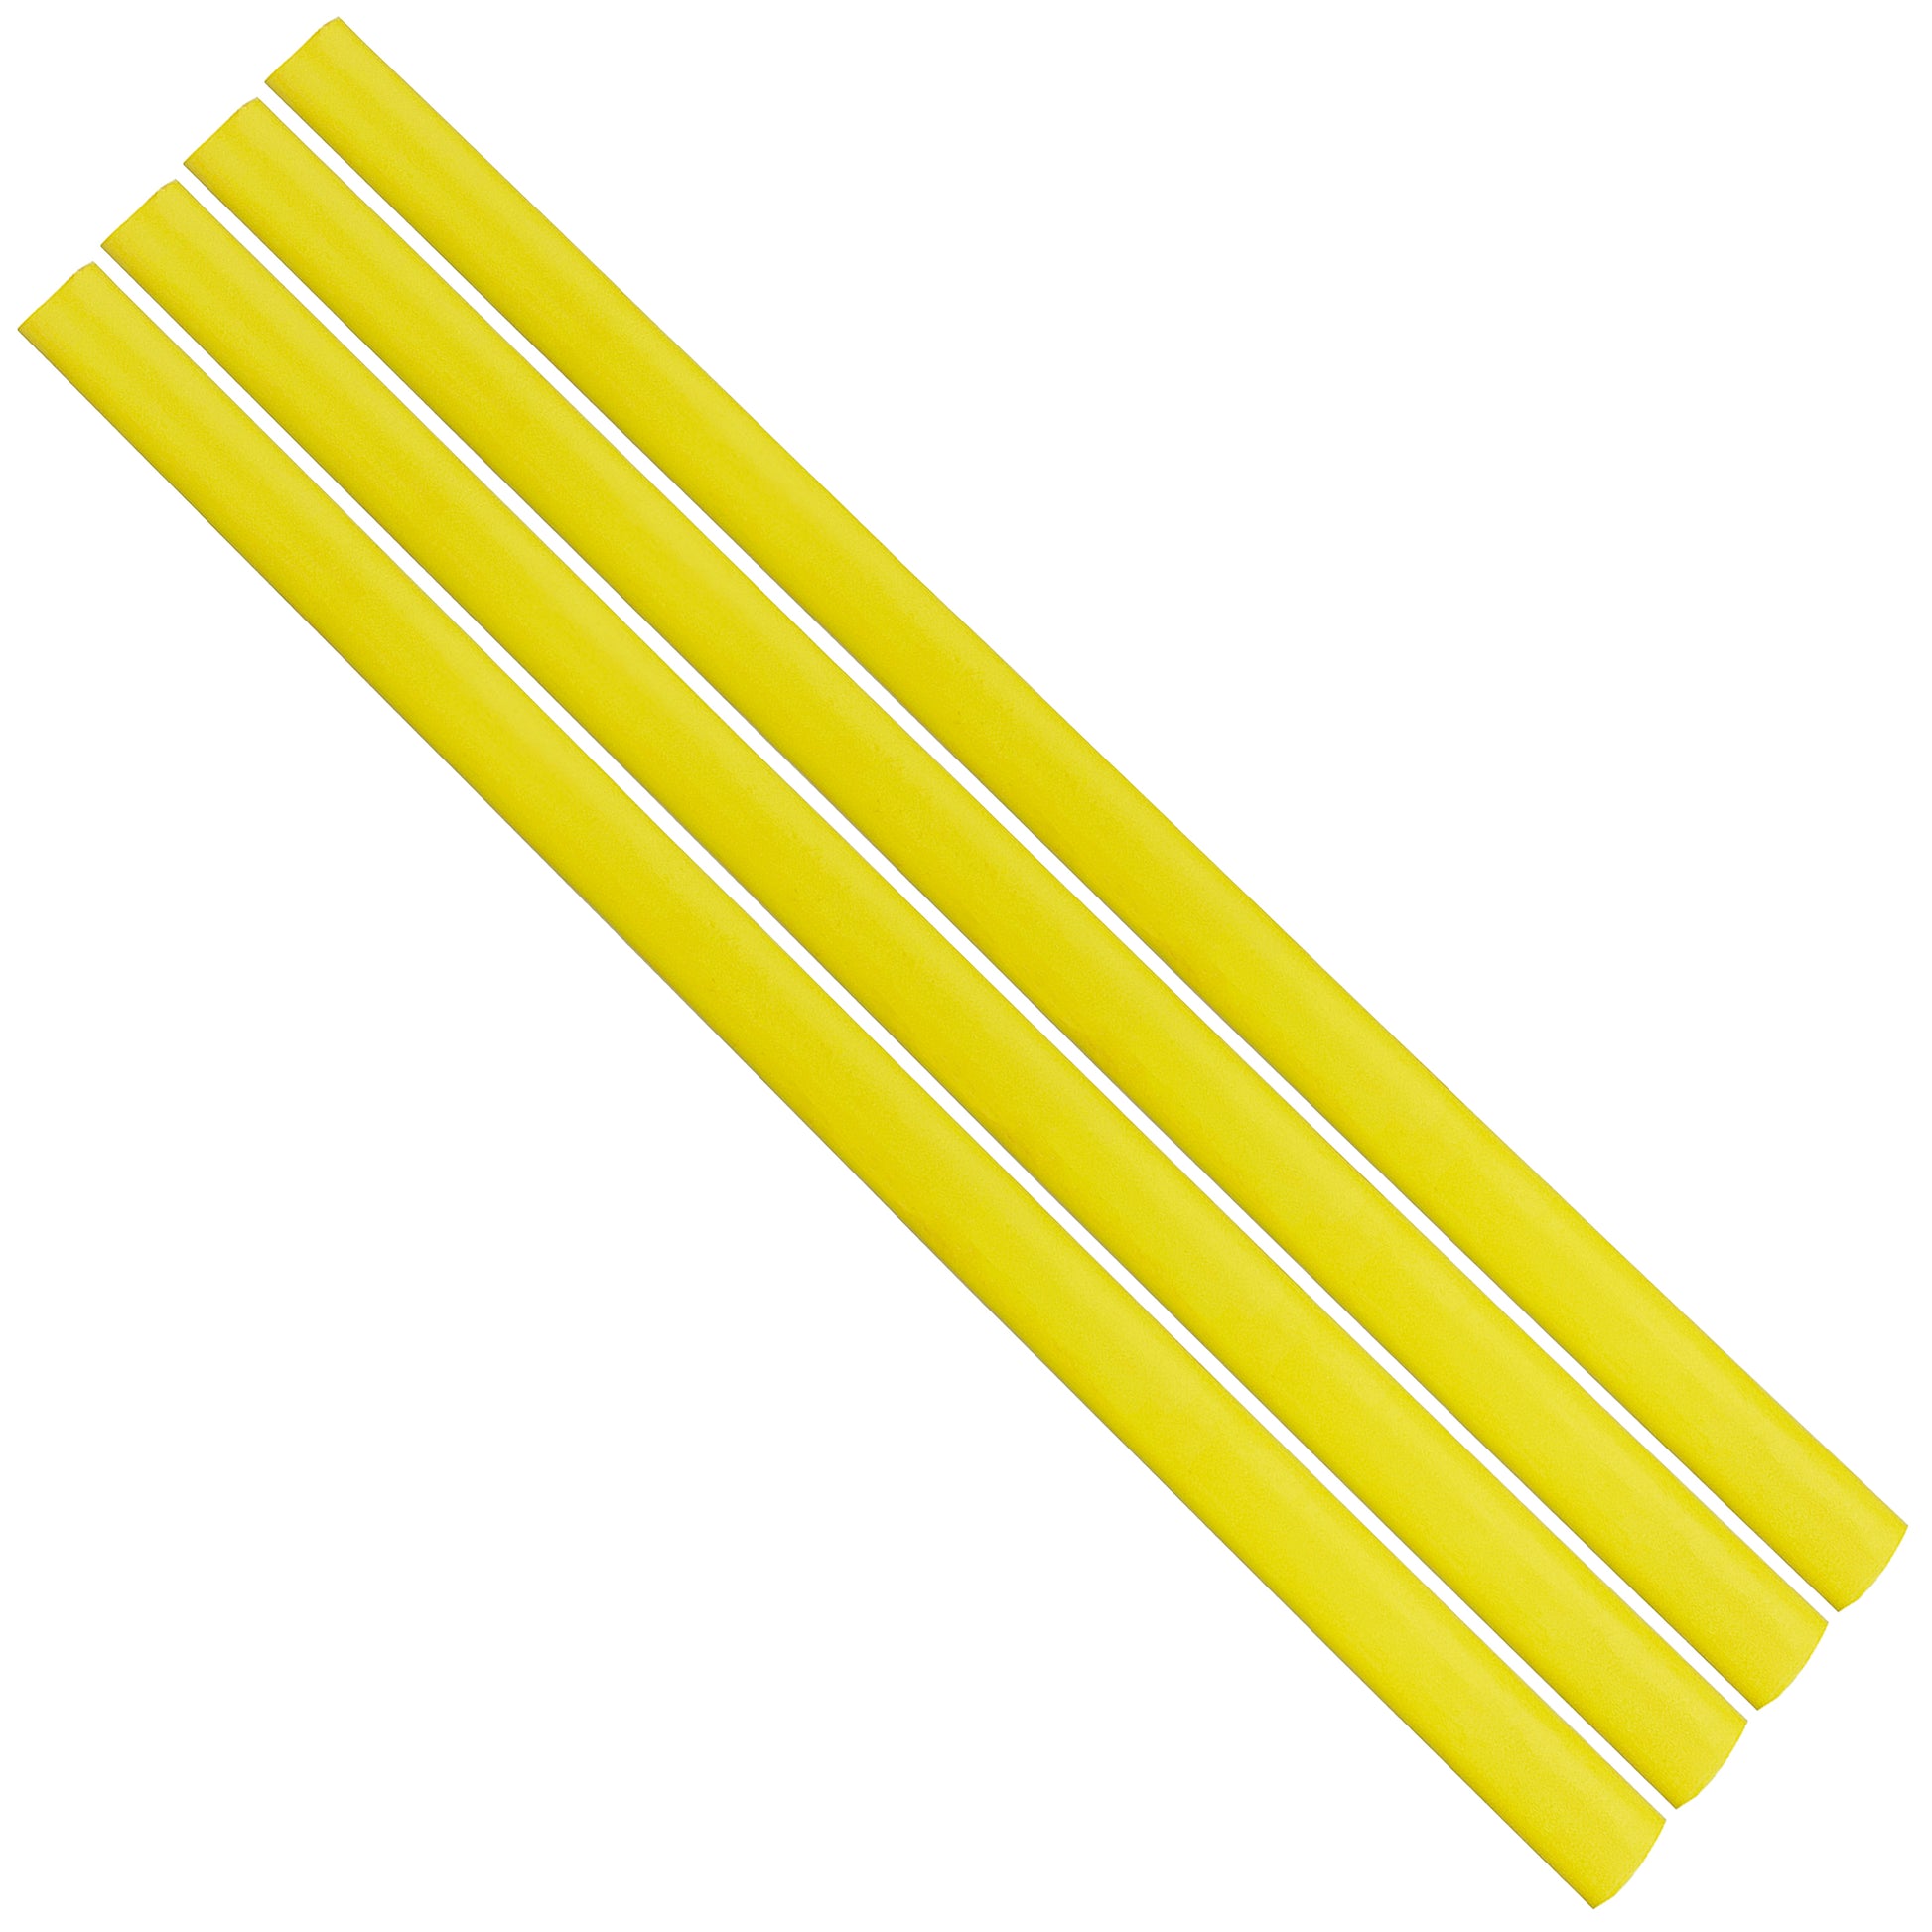 Flexible Thin Single Wall Non-Adhesive Heat Shrink Tubing 2:1 Yellow 1/2" ID - 100' Ft Spool